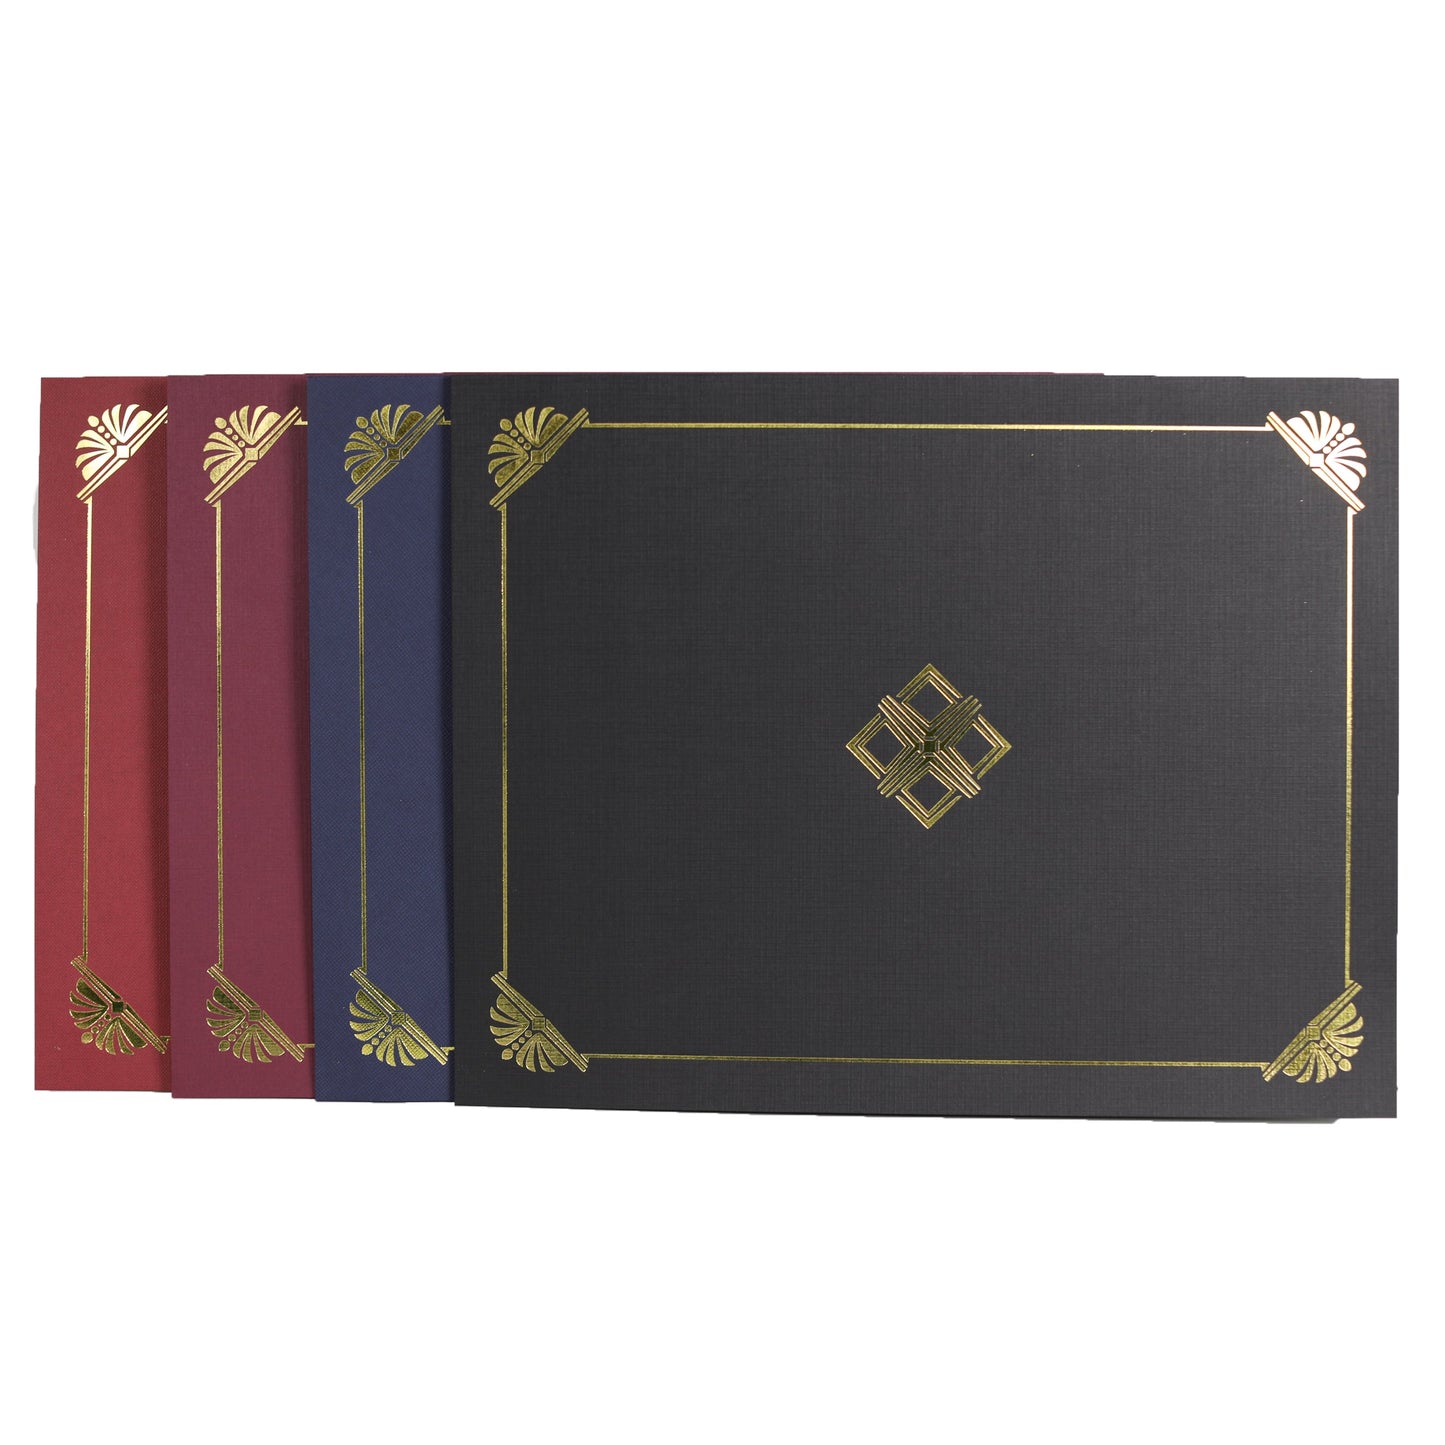 St. James® Certificate Holders/Document Covers/Diploma Holders, Burgundy, Gold Foil, Linen Finish, Pack of 5, 83810